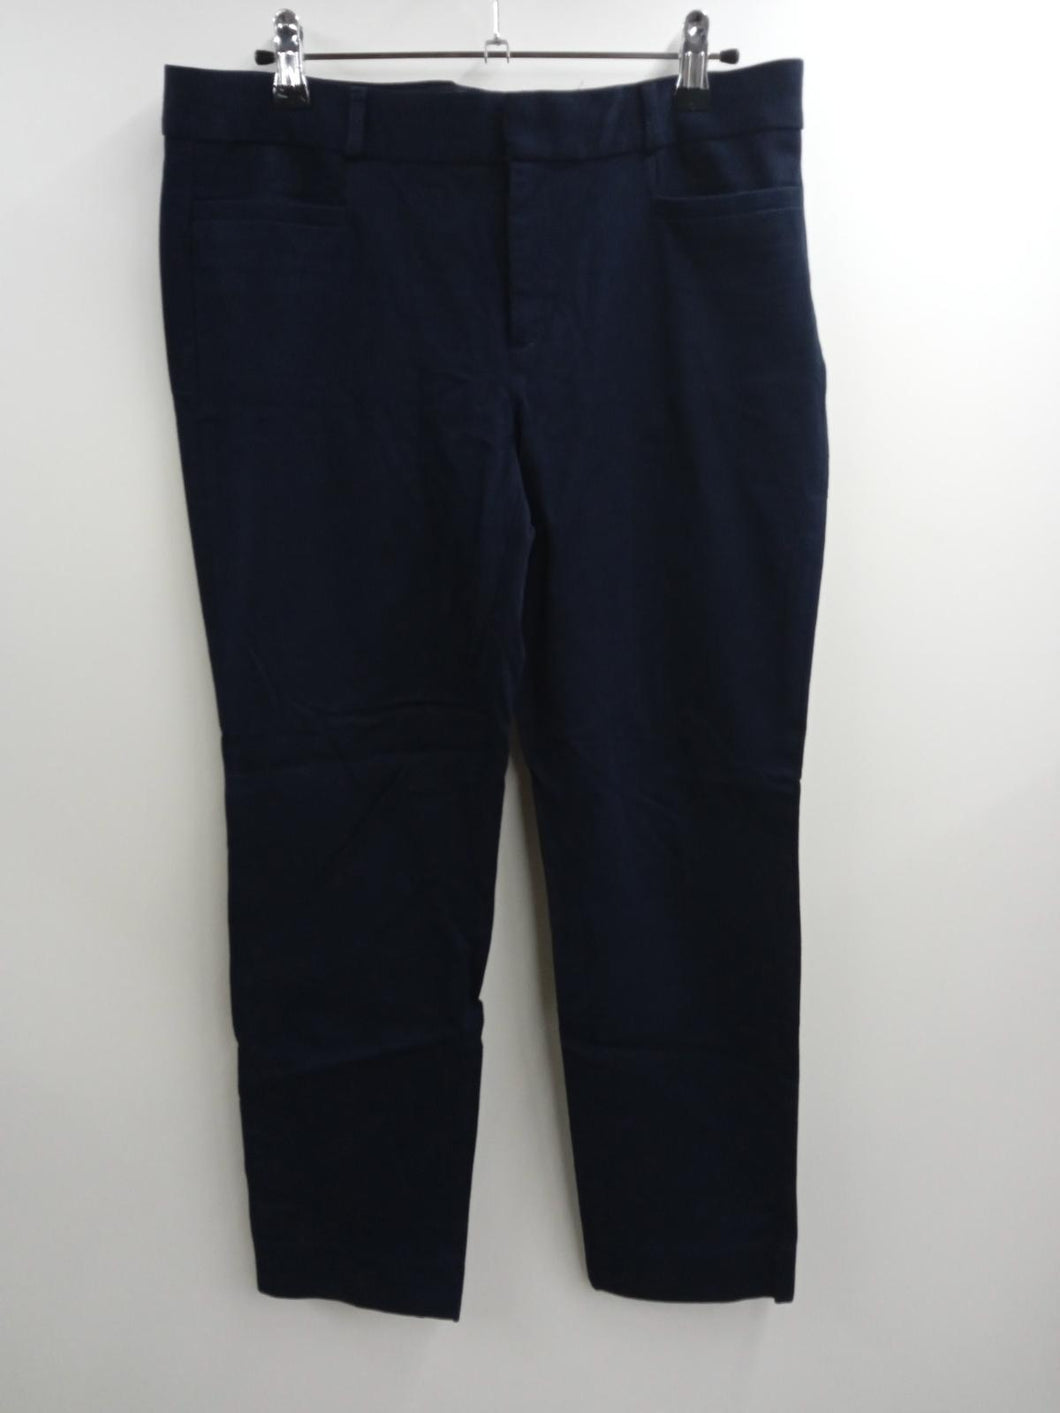 BANANA REPUBLIC Ladies Navy Blue Cotton Blend Straight Leg Trousers Size UK8